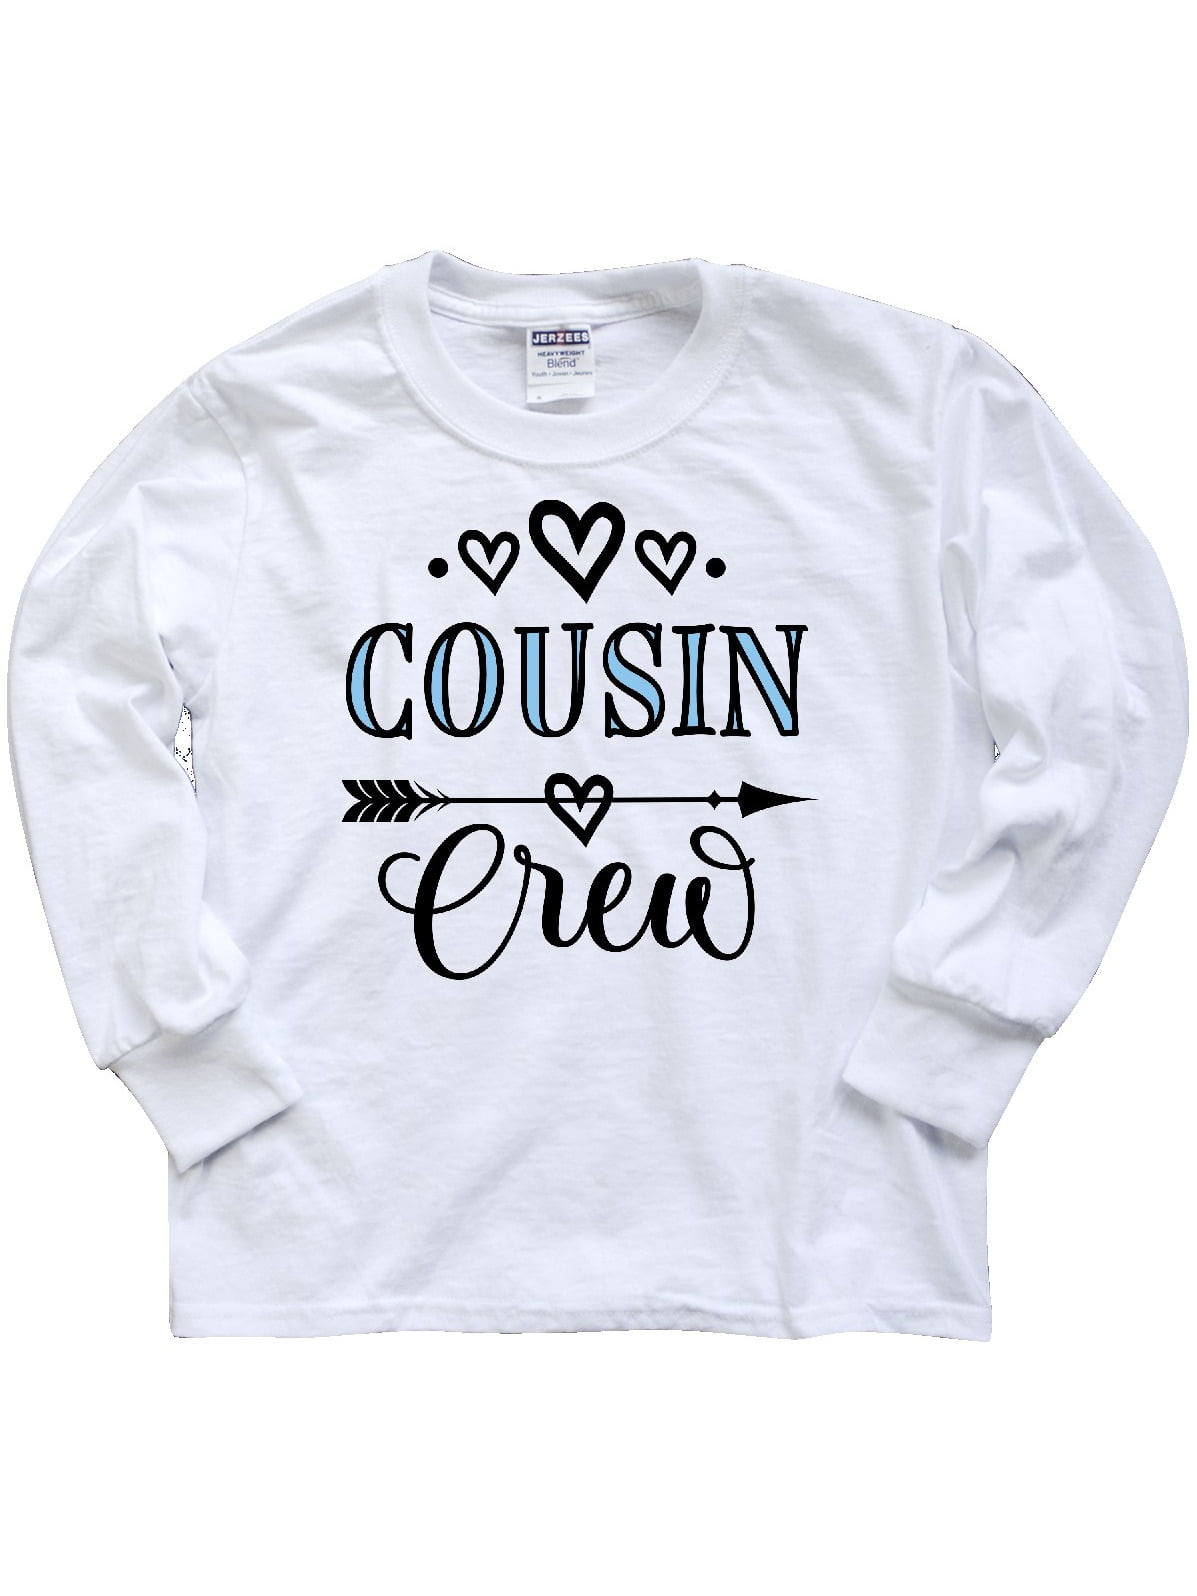 Buy > cousin crew long sleeve shirt > in stock